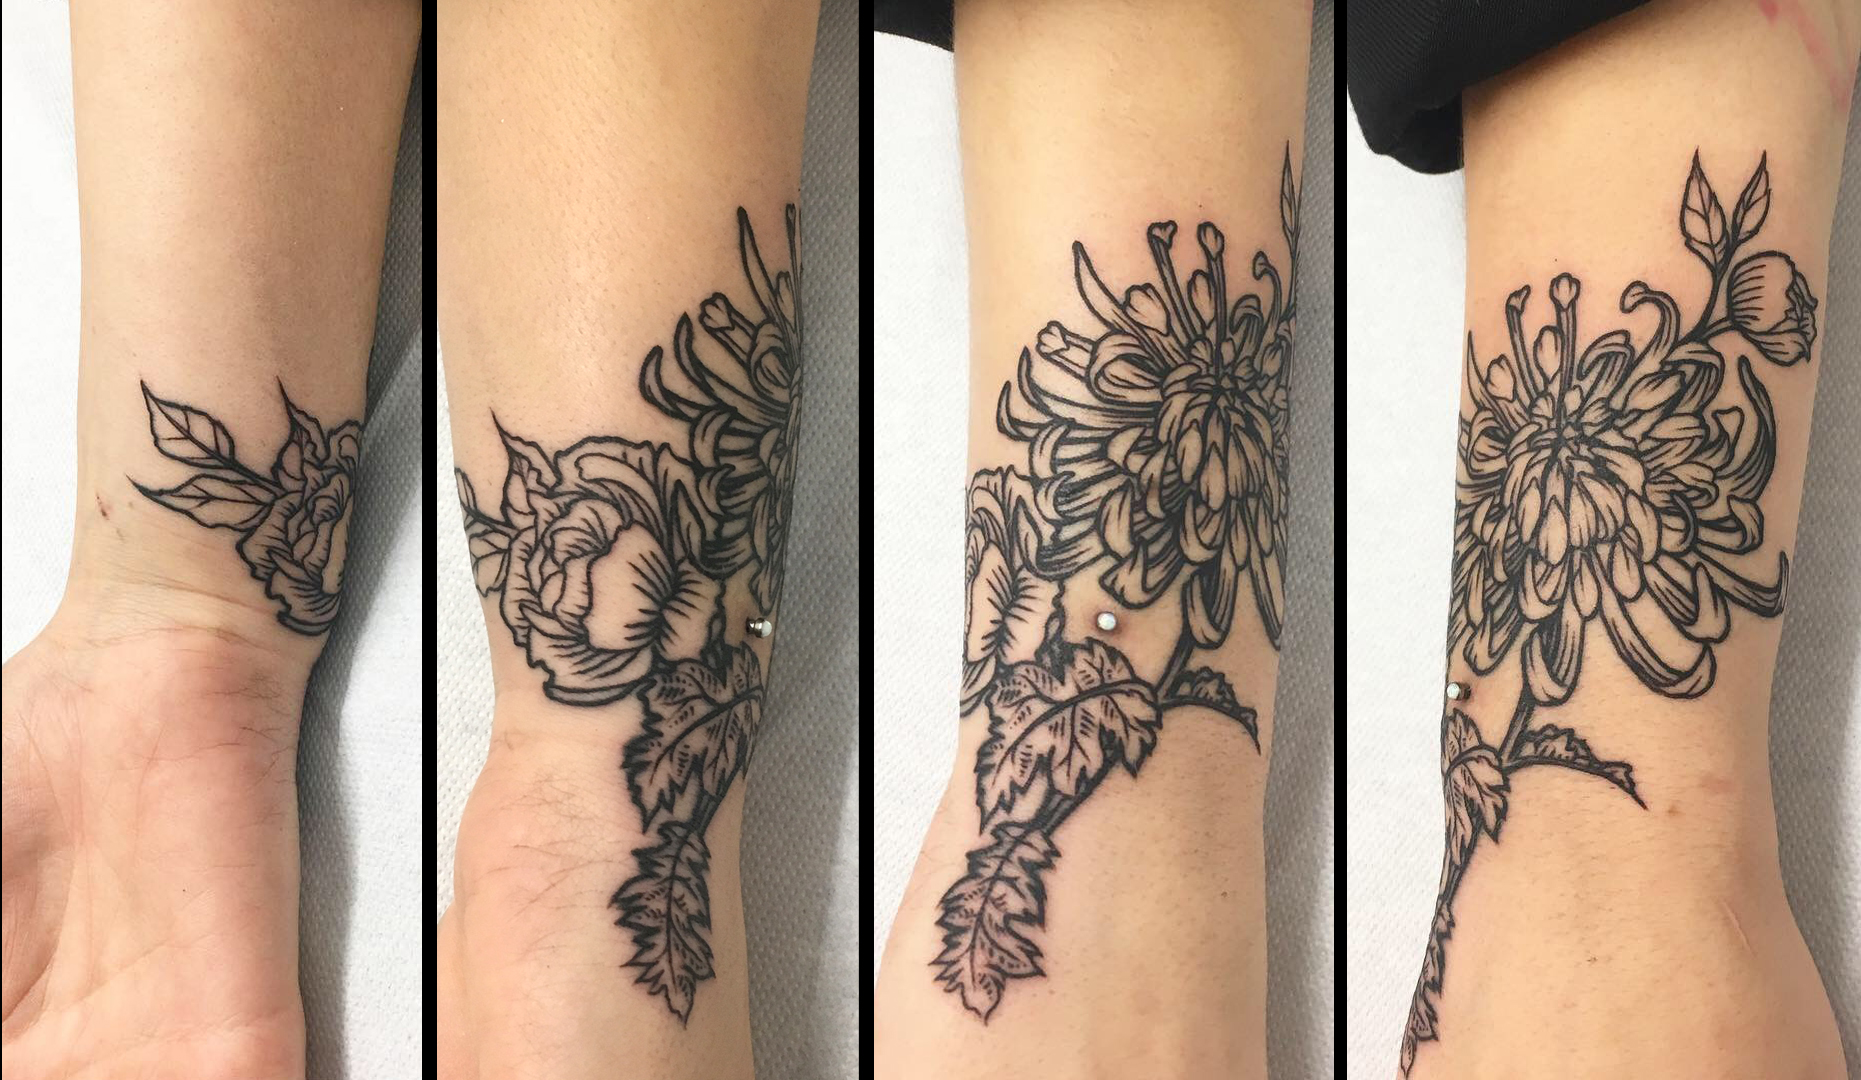 Tattoos Flower wrist tattoos Wrap around wrist tattoos